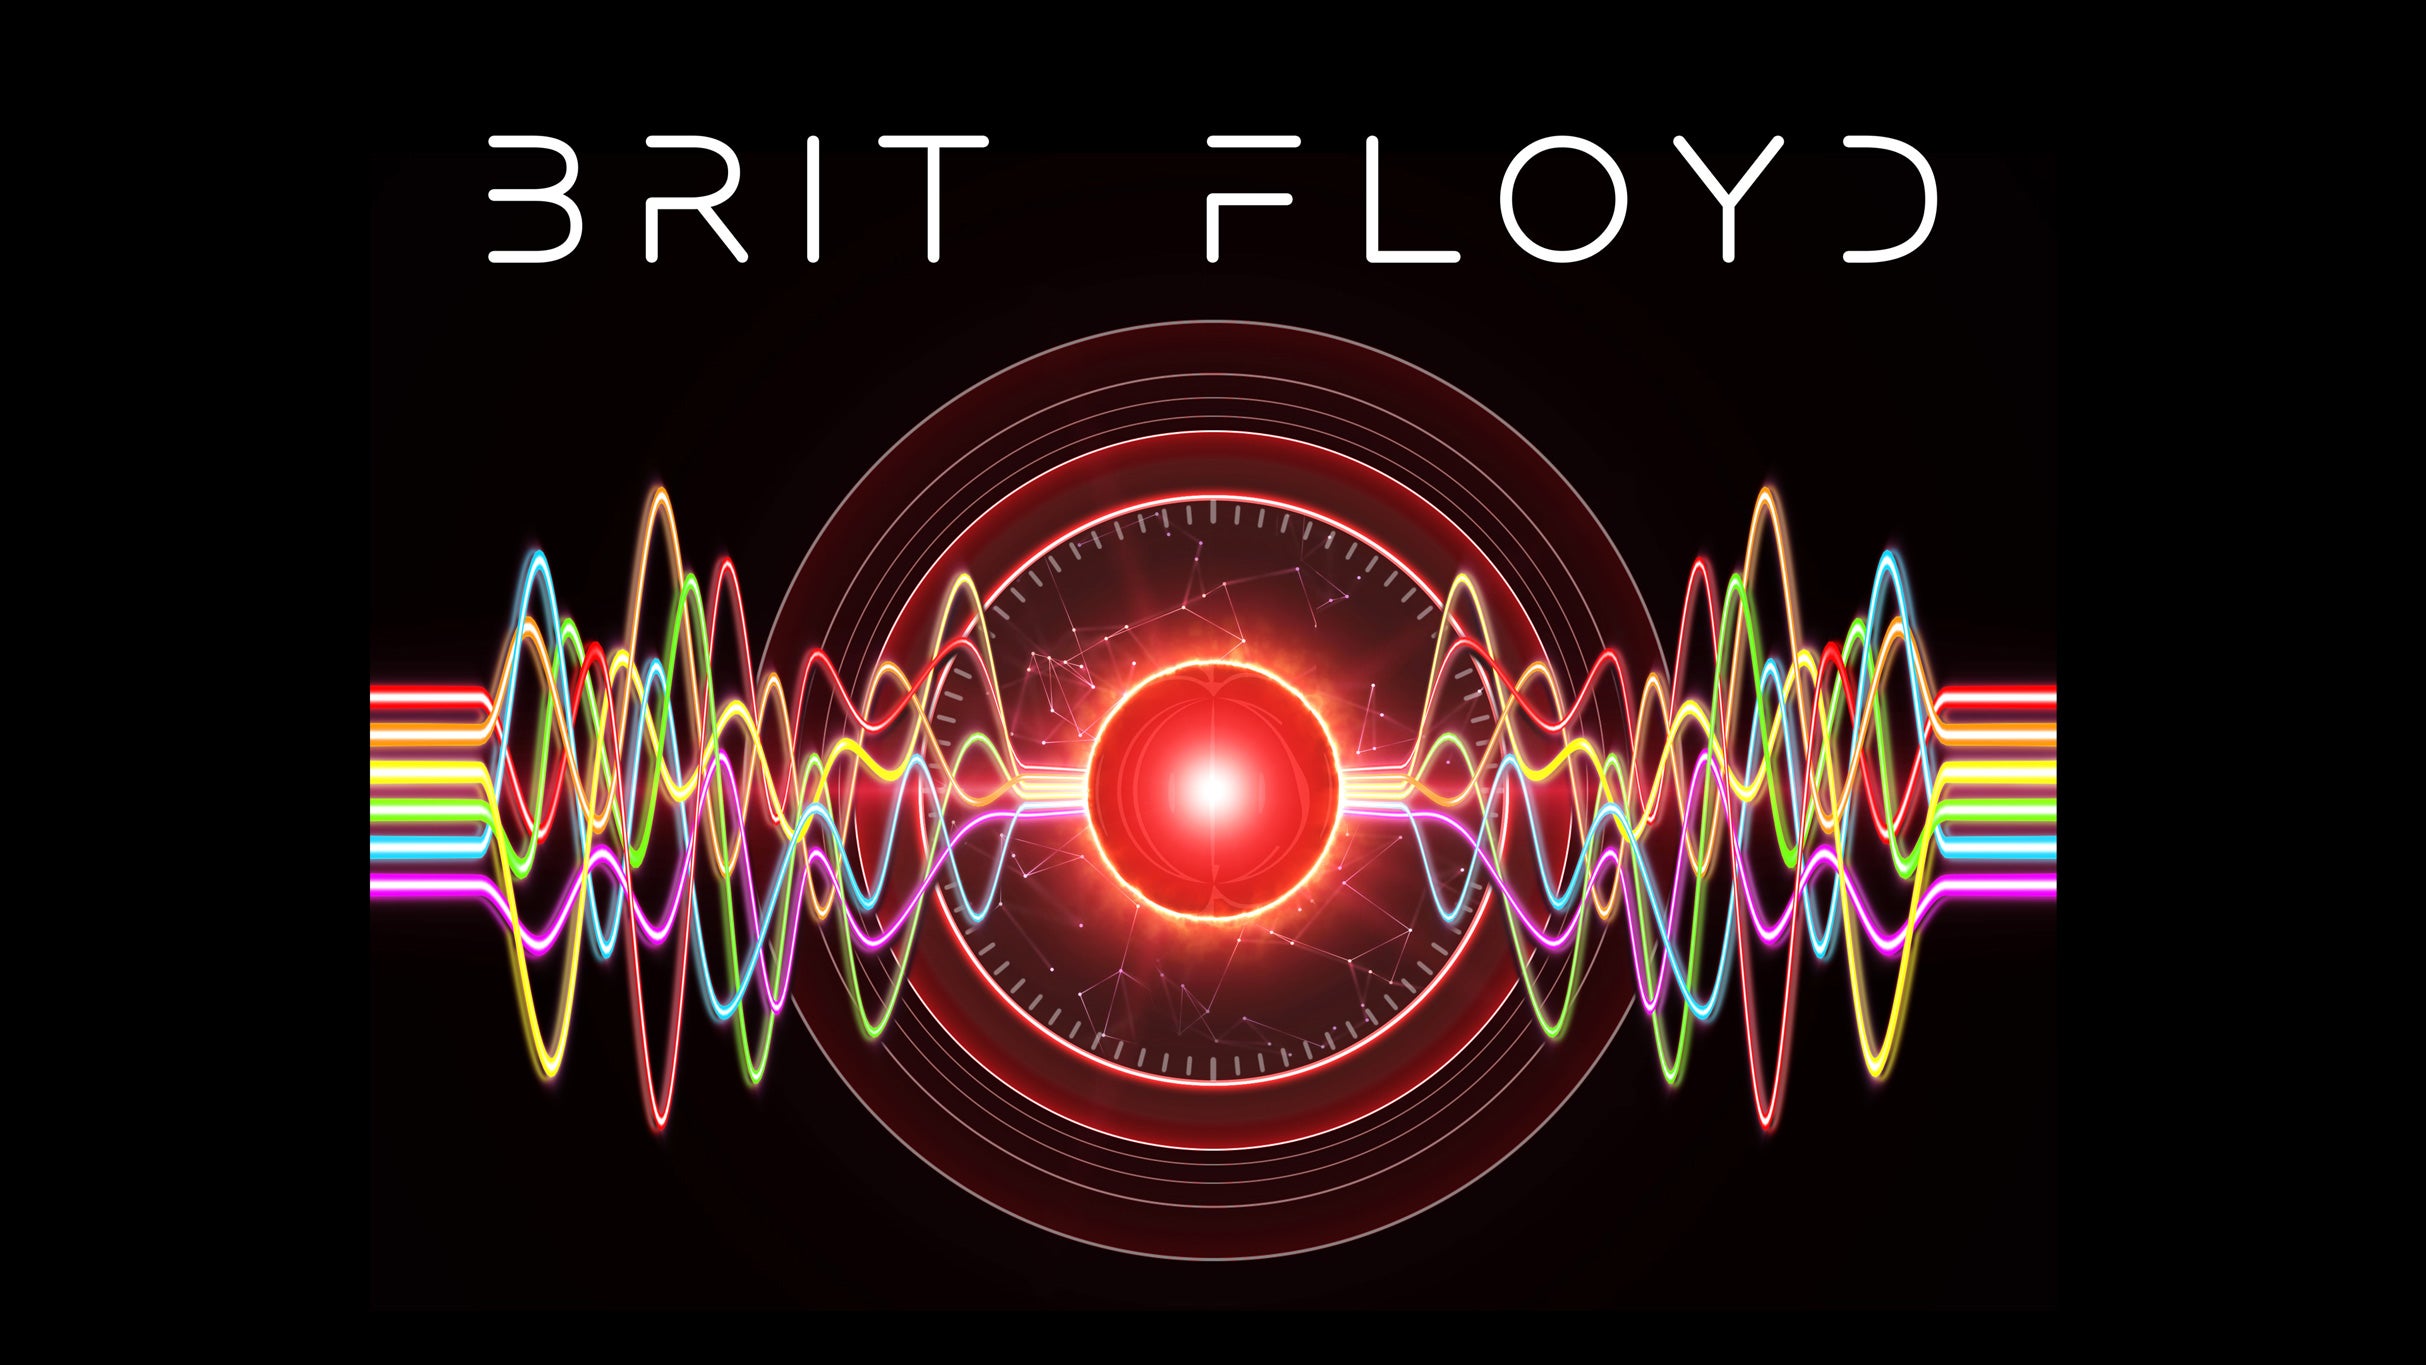 Brit Floyd presale password for show tickets in Tucson, AZ (Linda Ronstadt Music Hall)